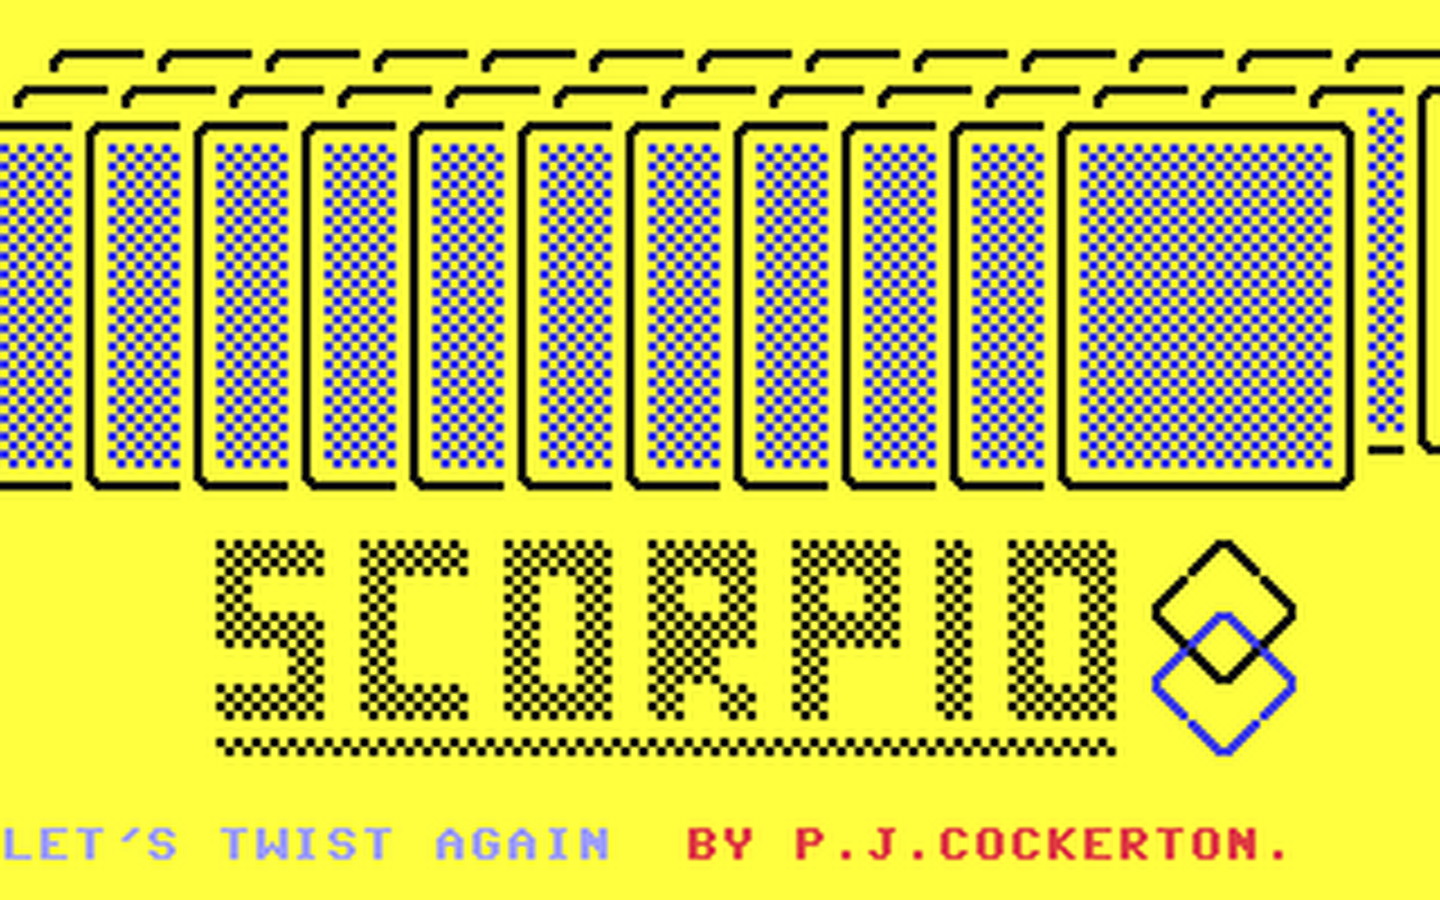 C64 GameBase Pontoon Argus_Specialist_Publications_Ltd./Home_Computing_Weekly 1985